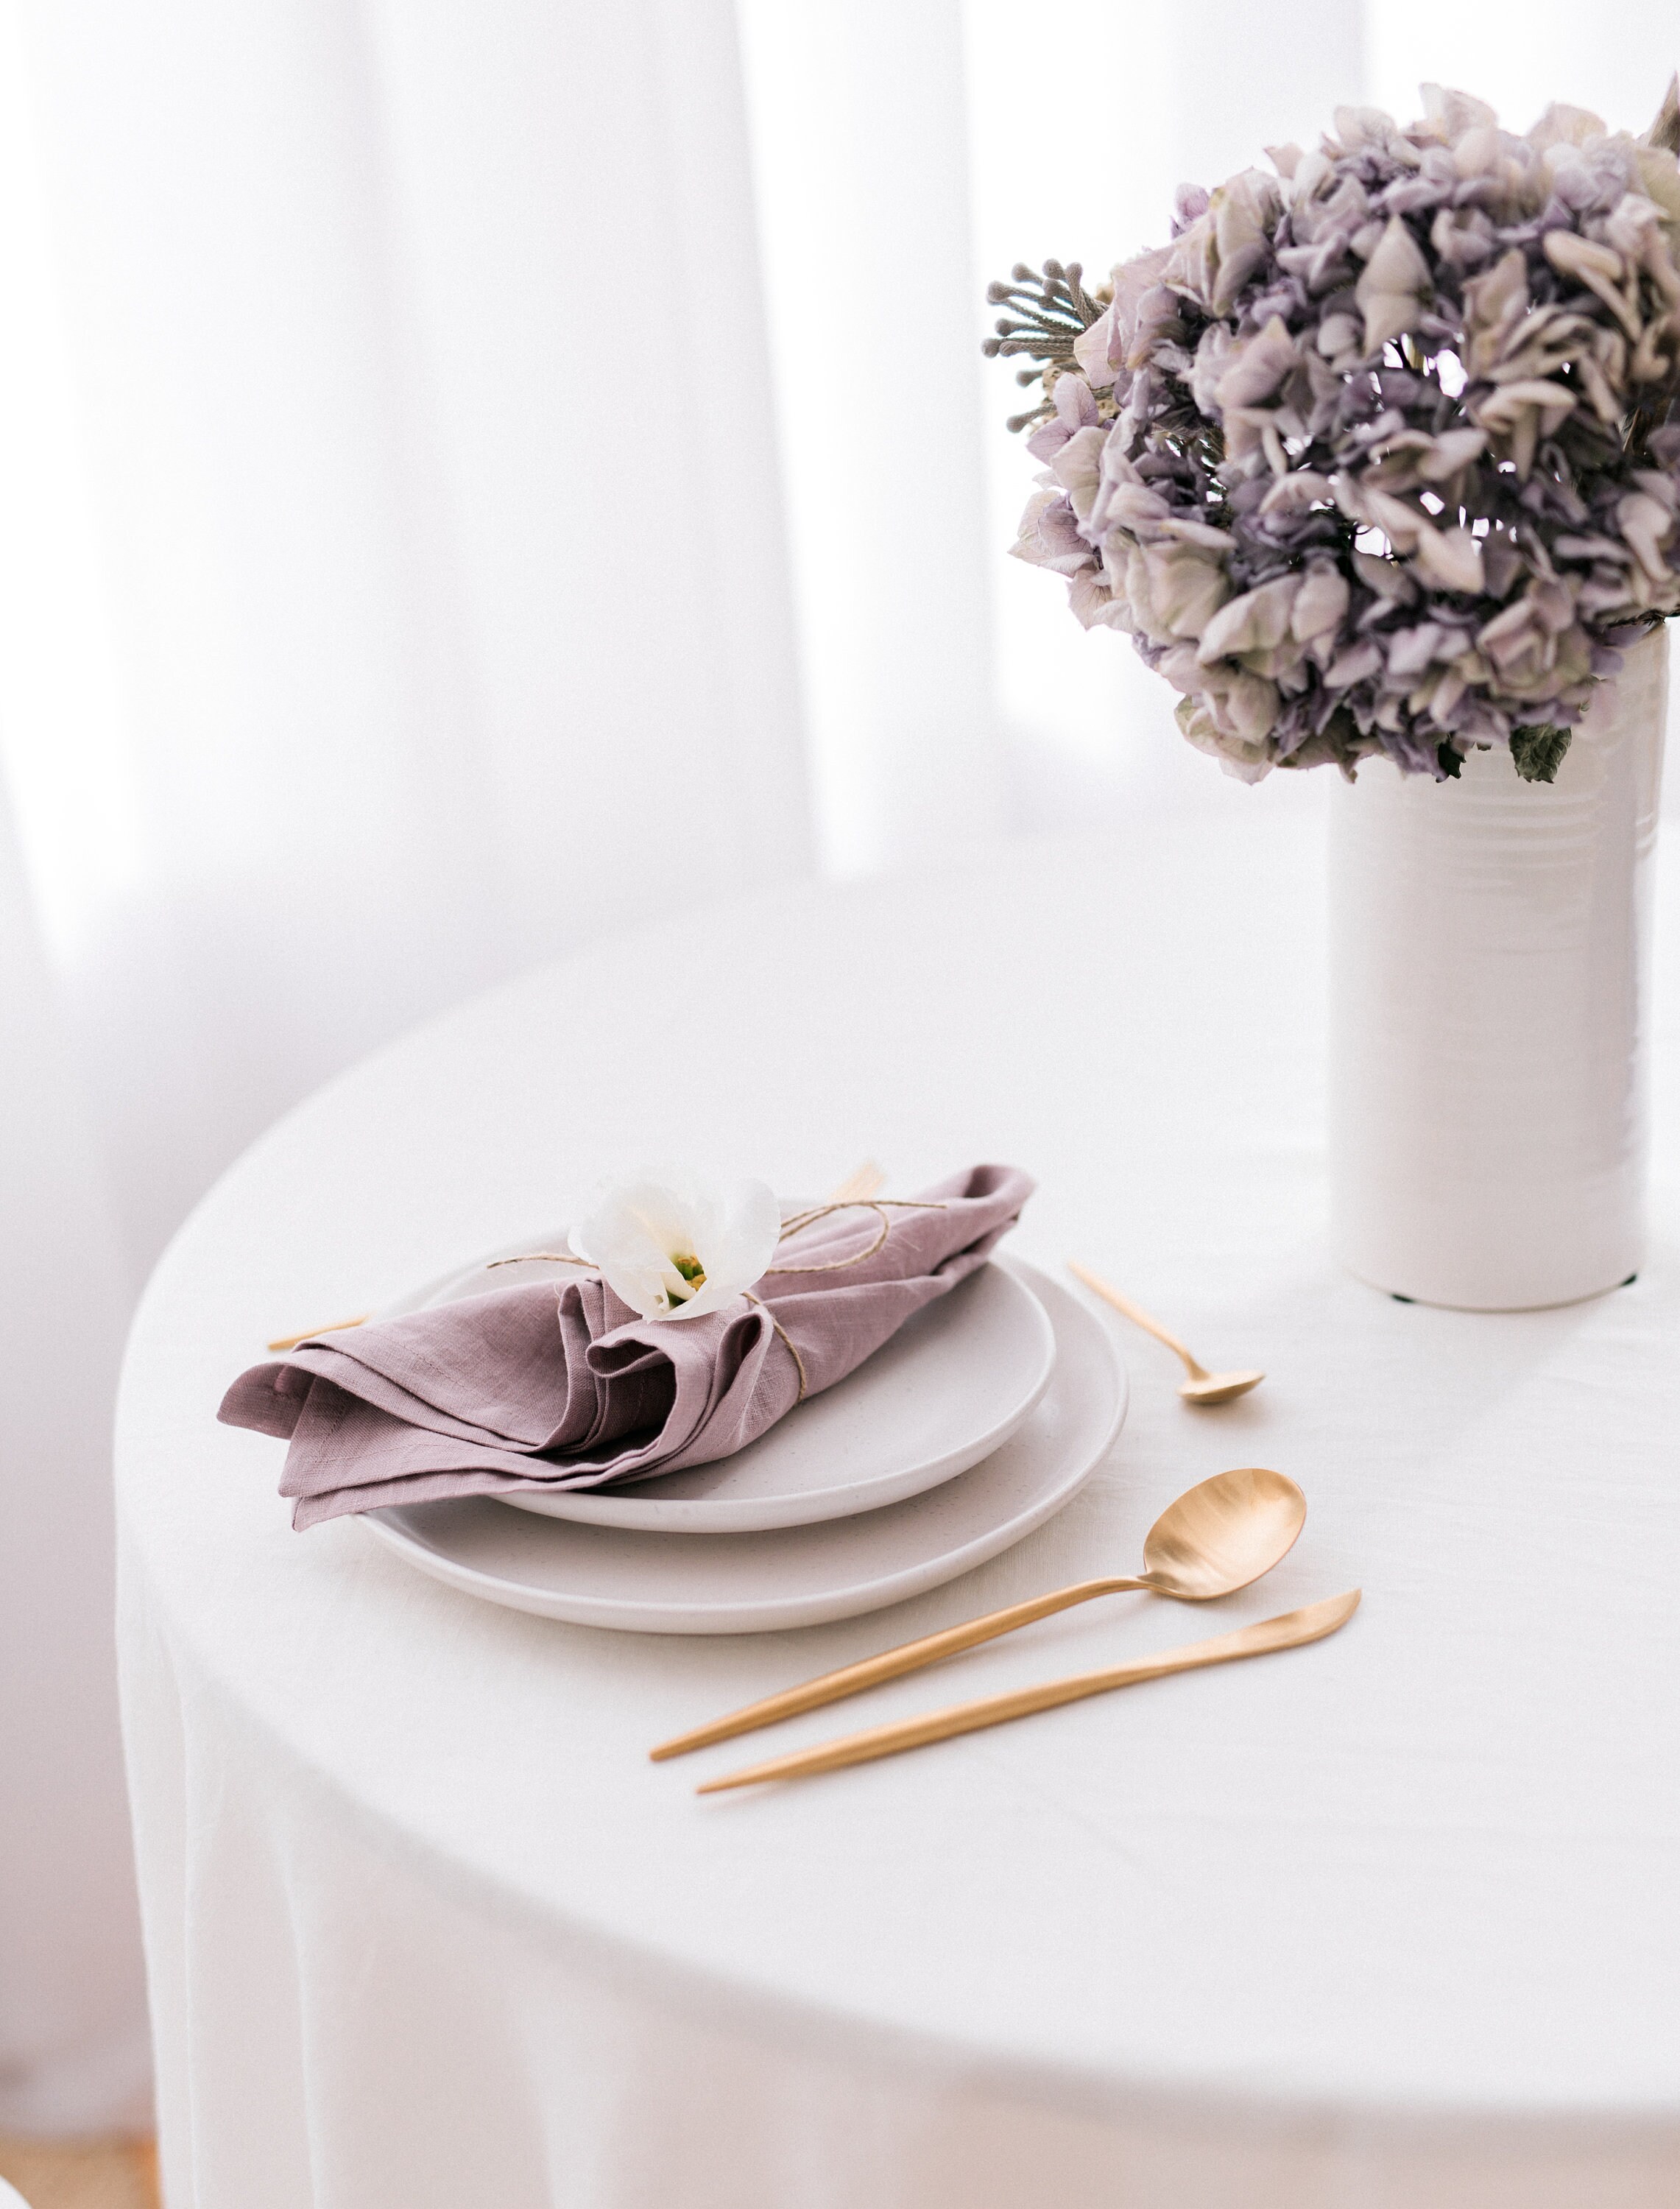 JINVASE Dinner Cloth Napkins Bulk,100% Soft Cotton Linen Napkins,Washable Napkins for Wedding Decorations,Family Event Parties,16”*16”,(Set of 6